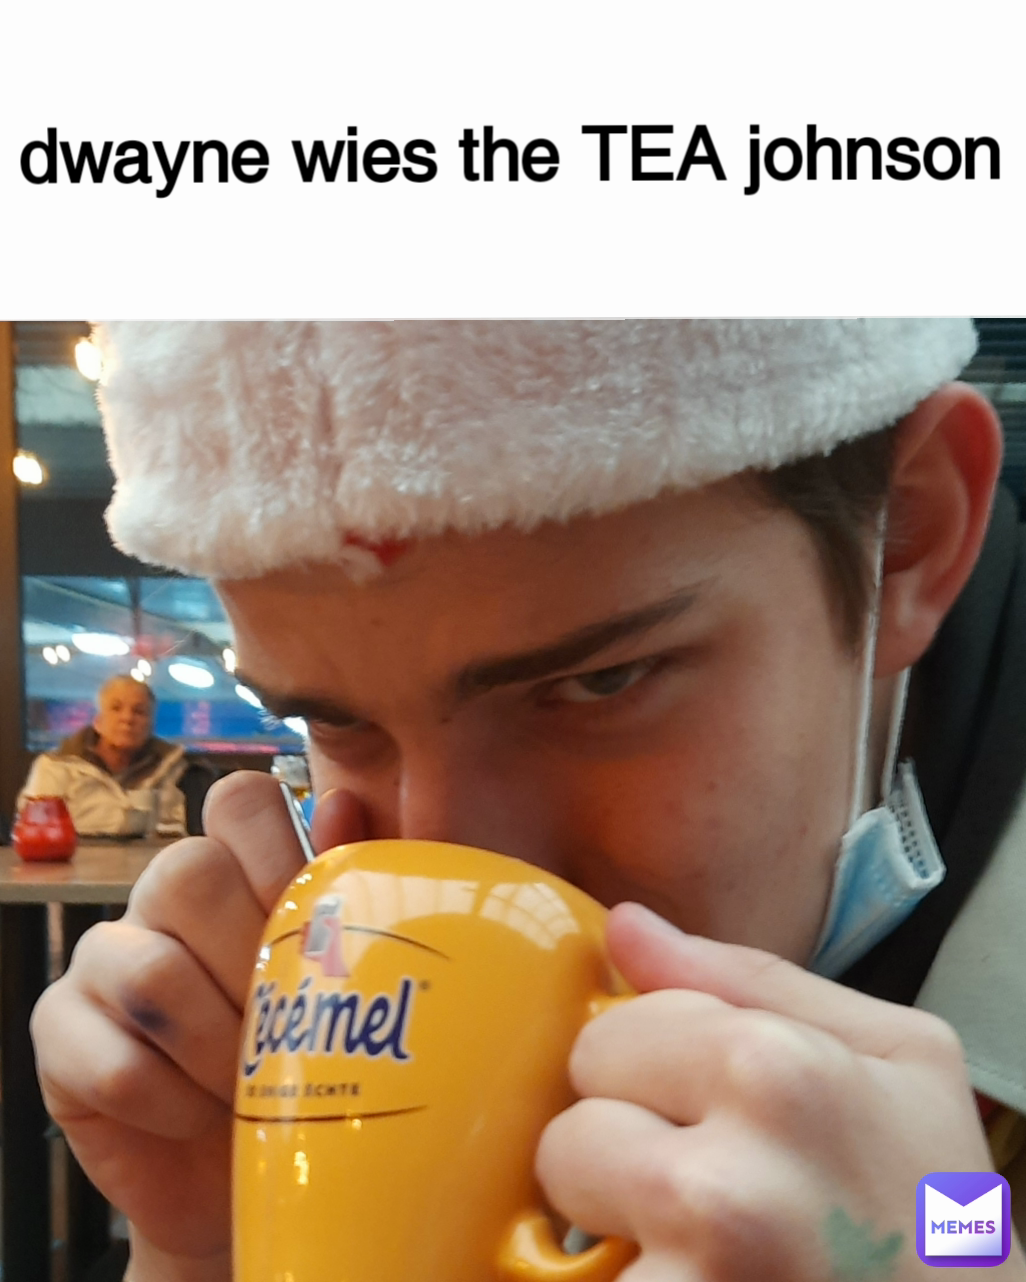 dwayne wies the TEA johnson